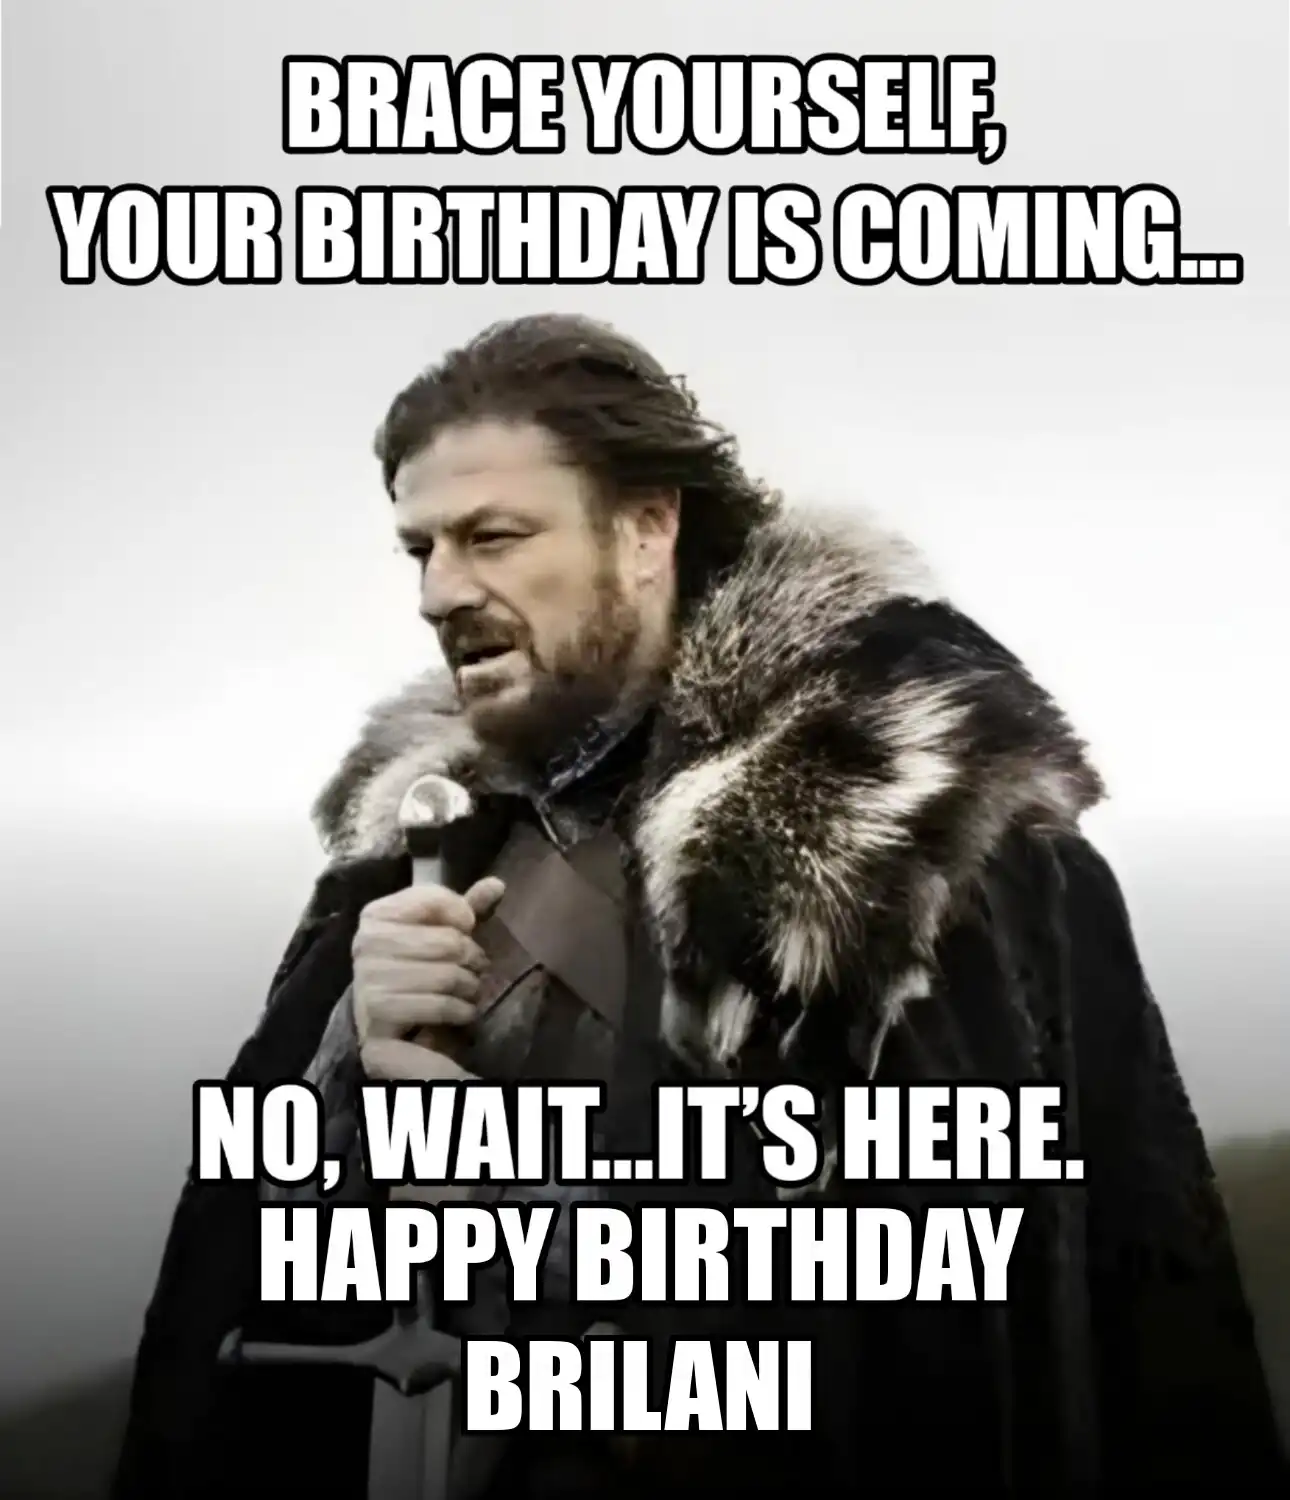 Happy Birthday Brilani Brace Yourself Your Birthday Is Coming Meme